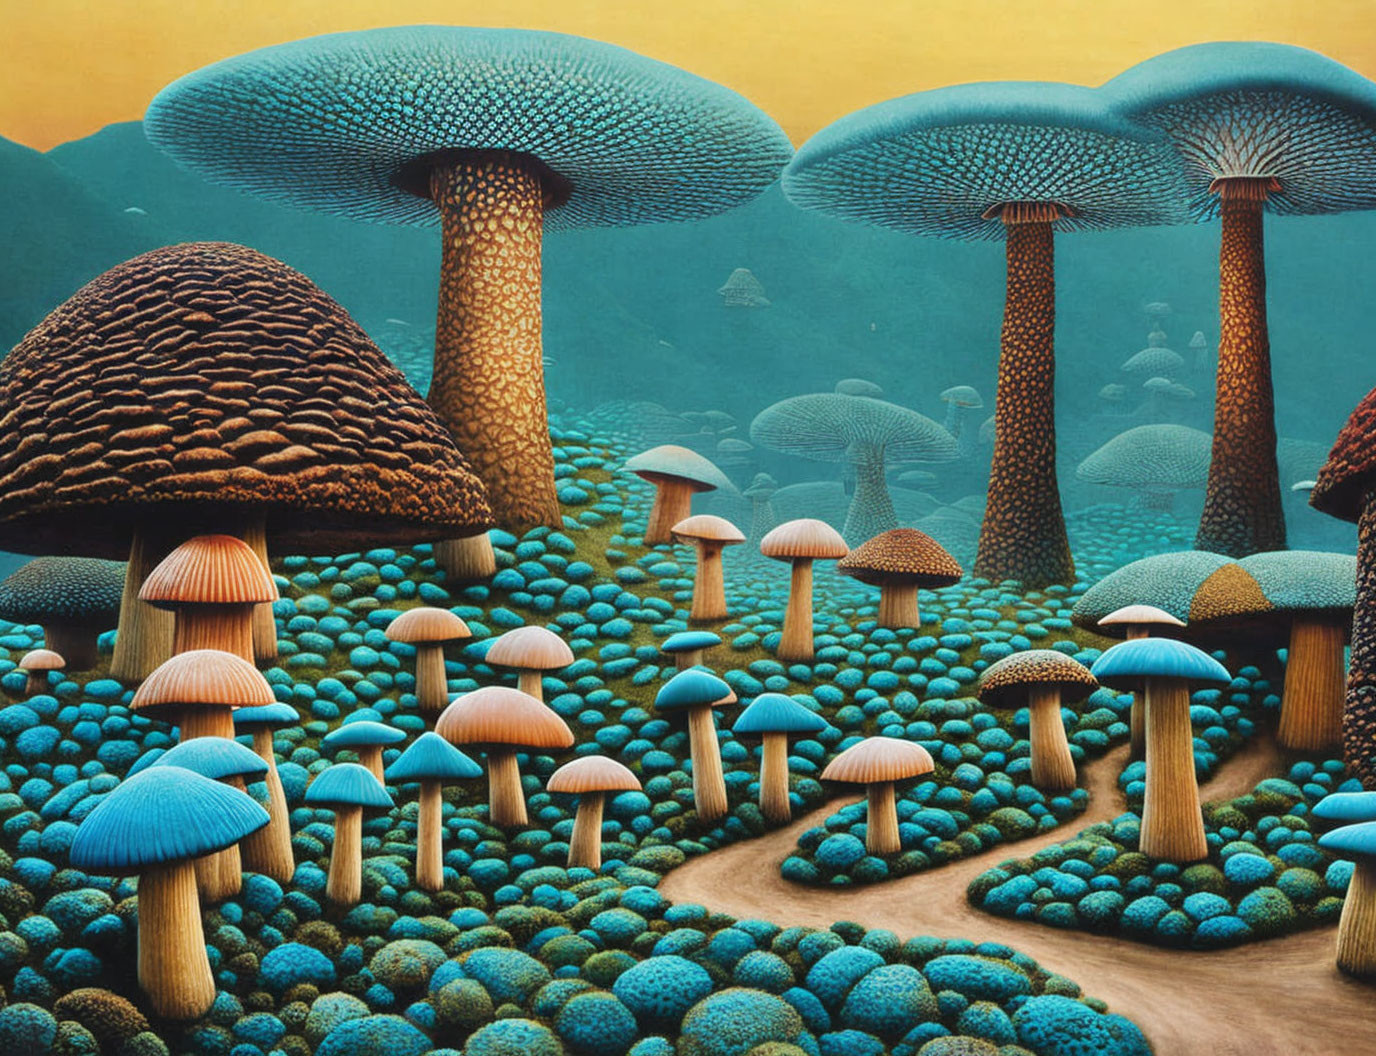 Fantasy Mushroom Forest Illustration in Blue and Brown Tones